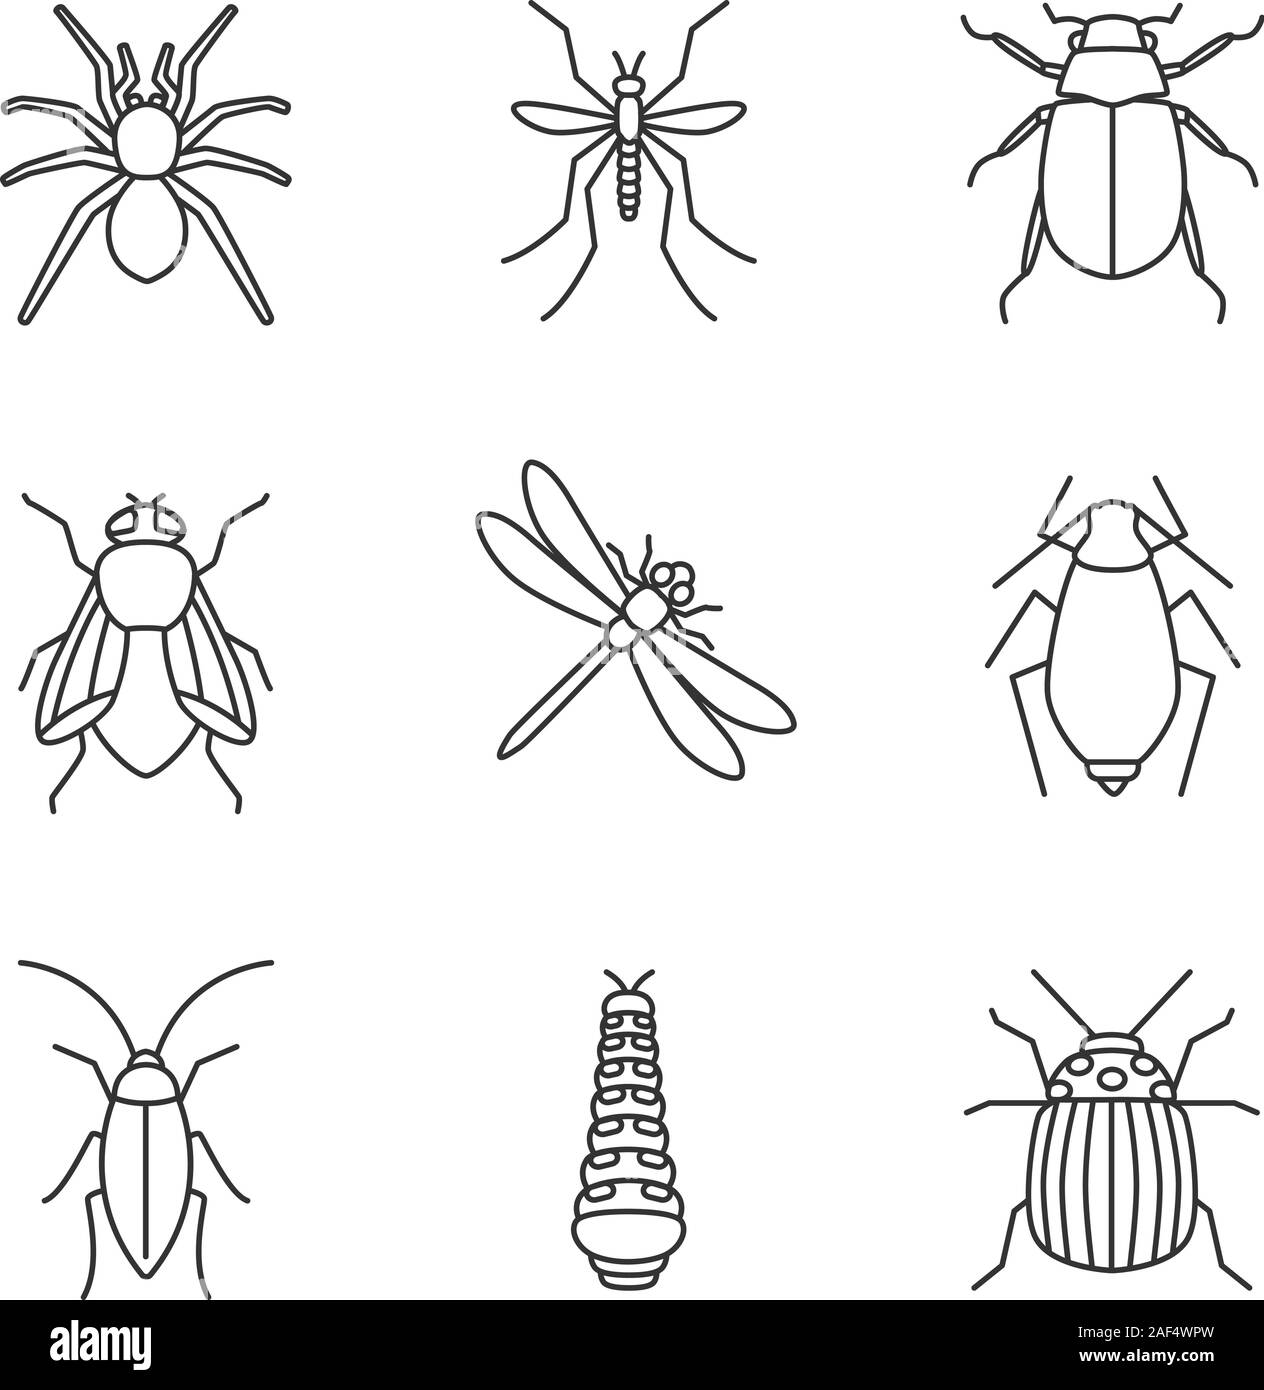 Lineare Symbole gesetzt. Spider, Mosquito, maybug, Kakerlake, Stubenfliege, Libelle, Bluter, Caterpillar, Colorado bug. Thin Line Kontur Symbole. Isolierte vect Stock Vektor